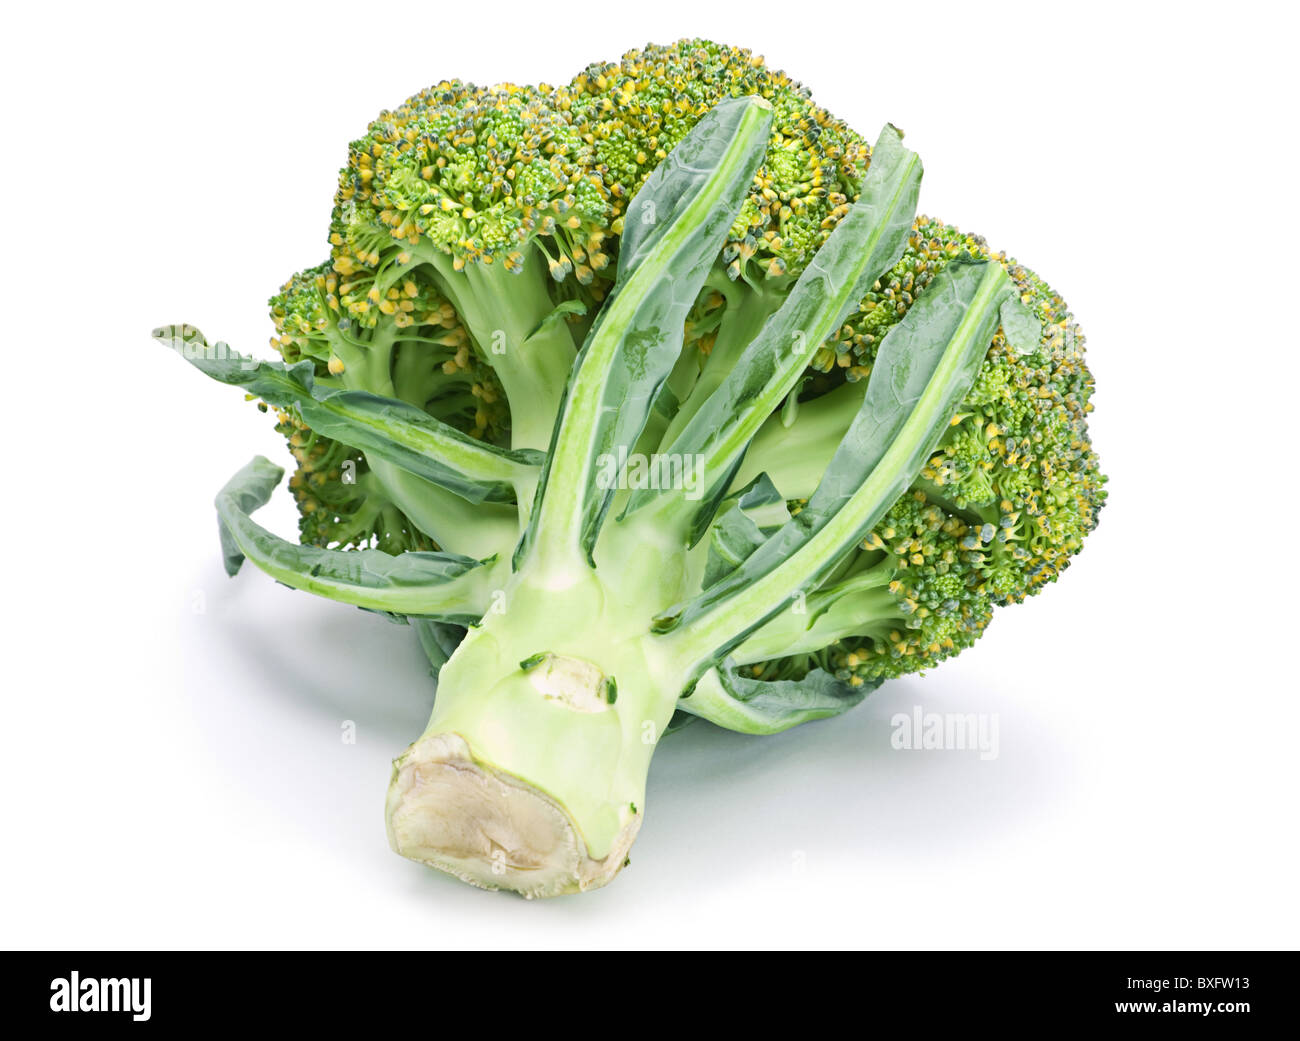 Broccoli cabbage Stock Photo